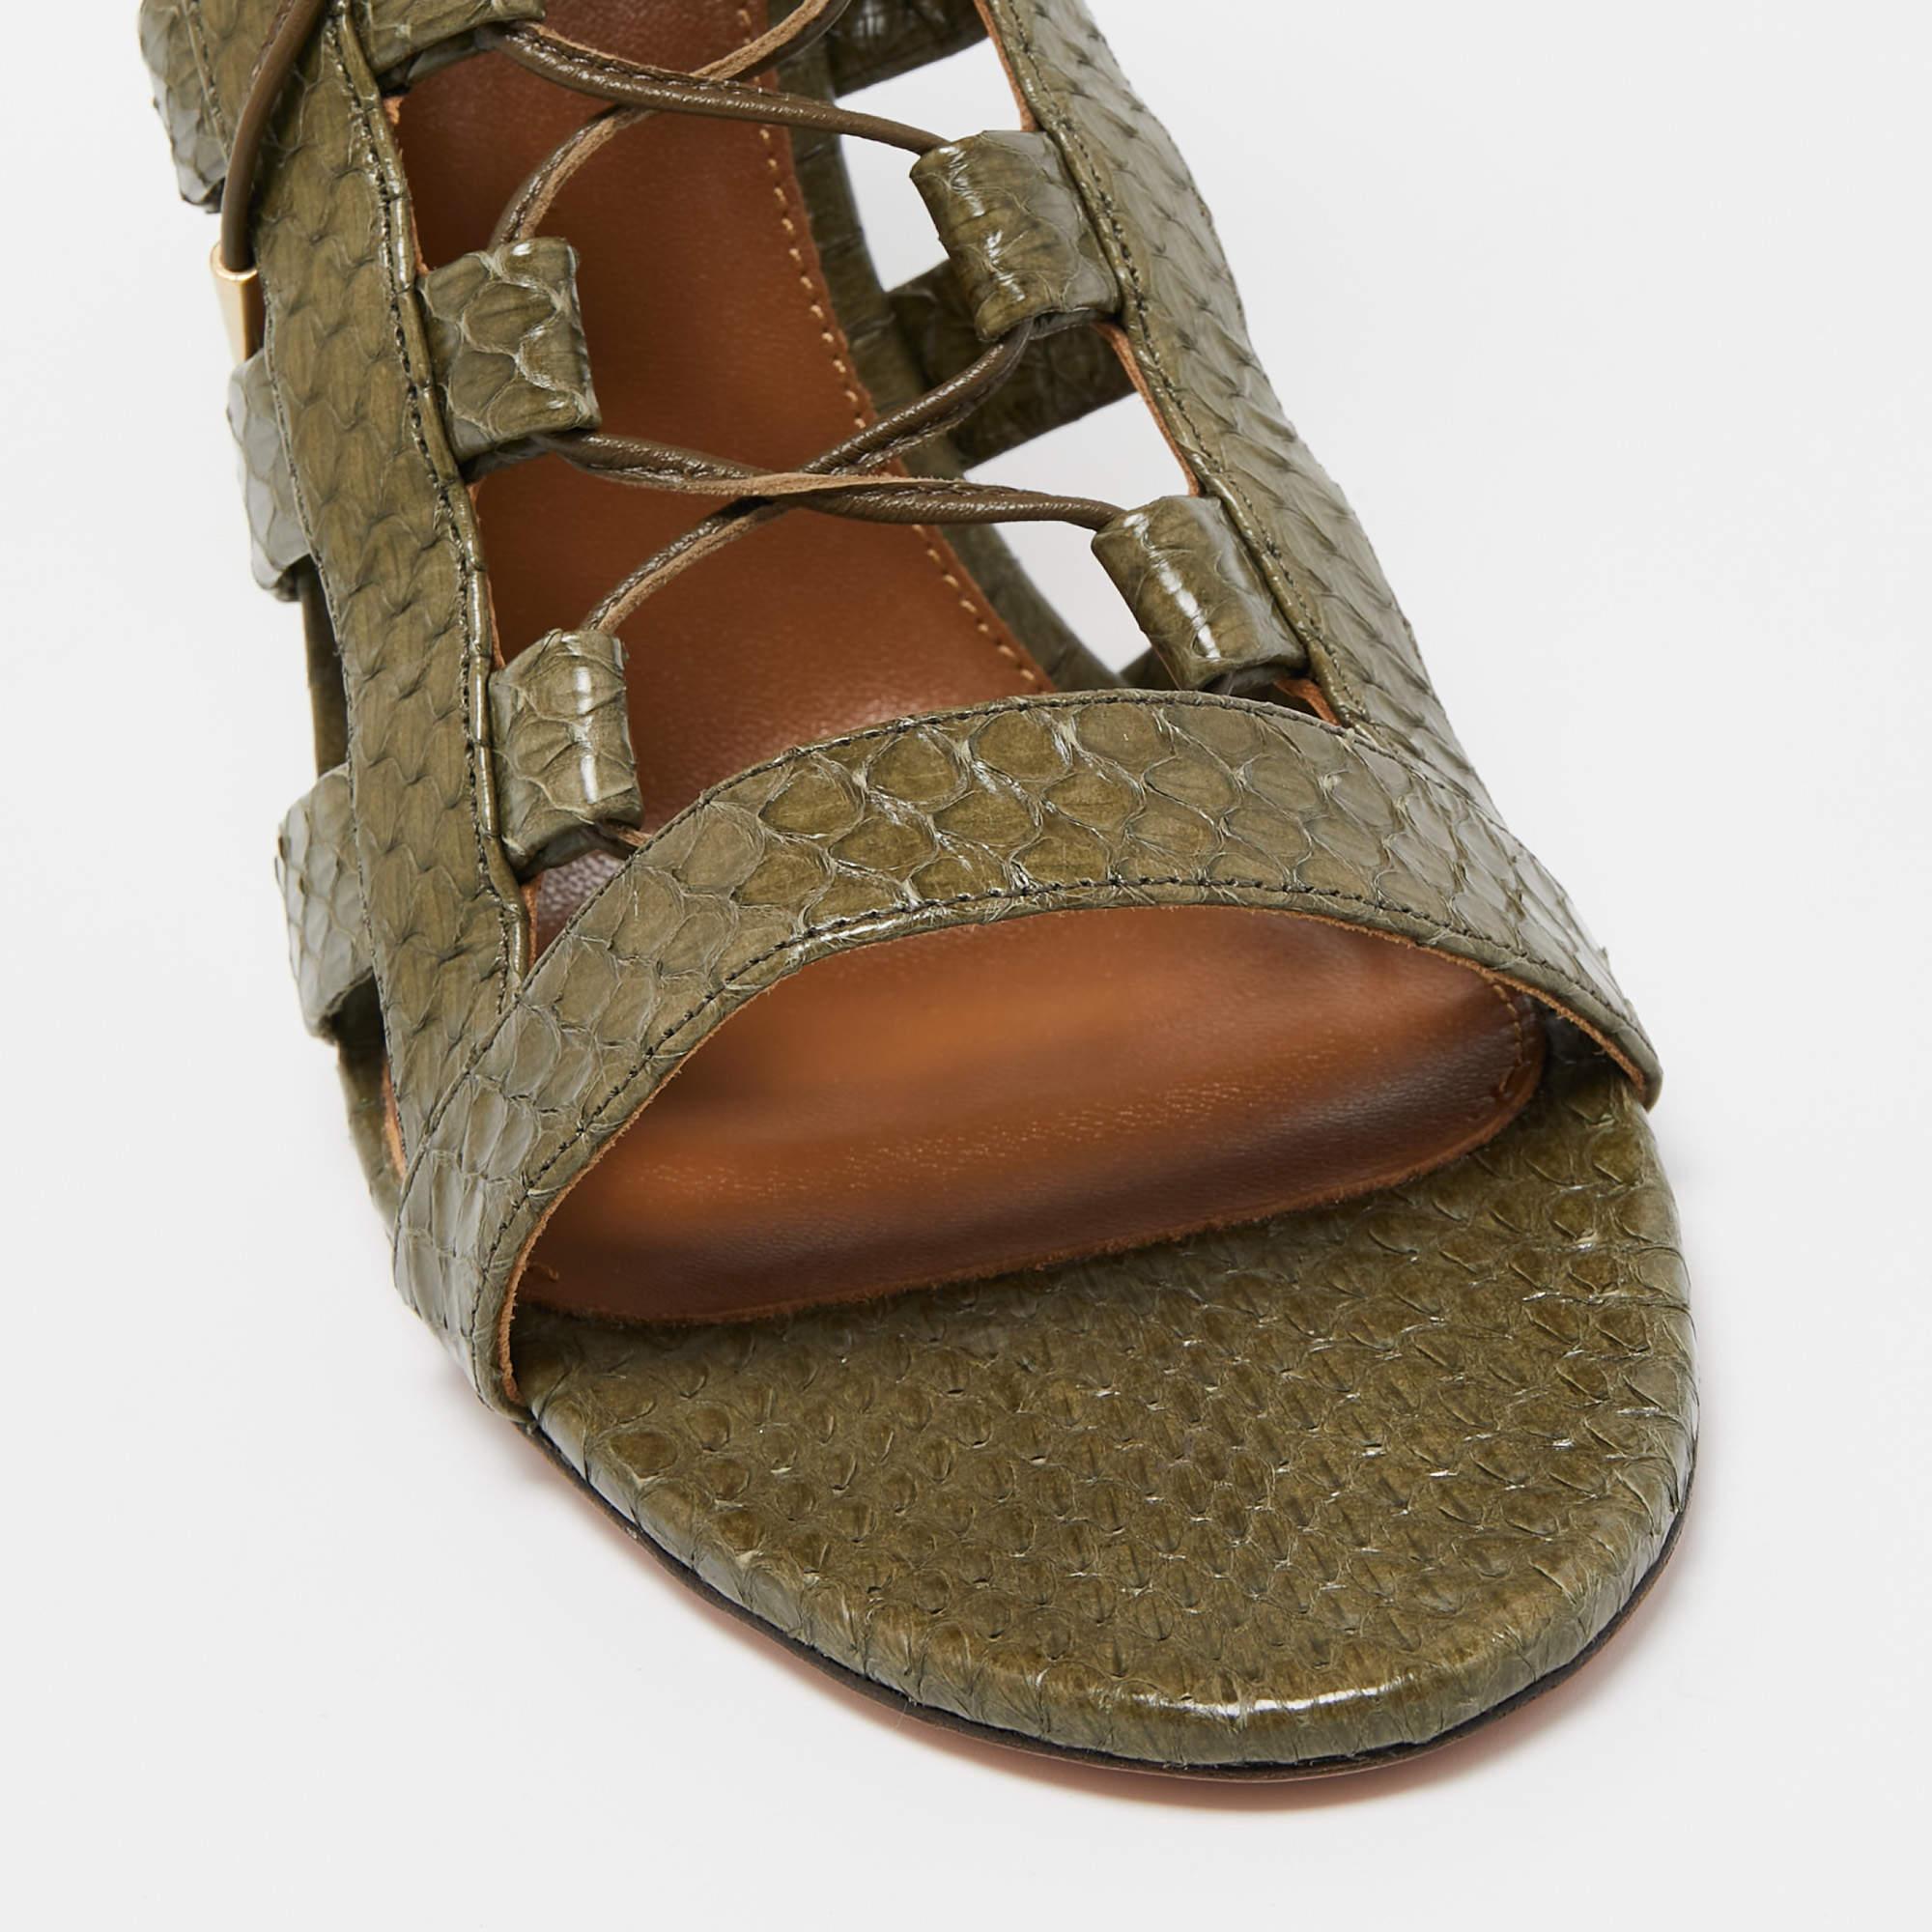 Aquazzura Green Python Amazon Lace Up Open Toe Sandals Size 41 1